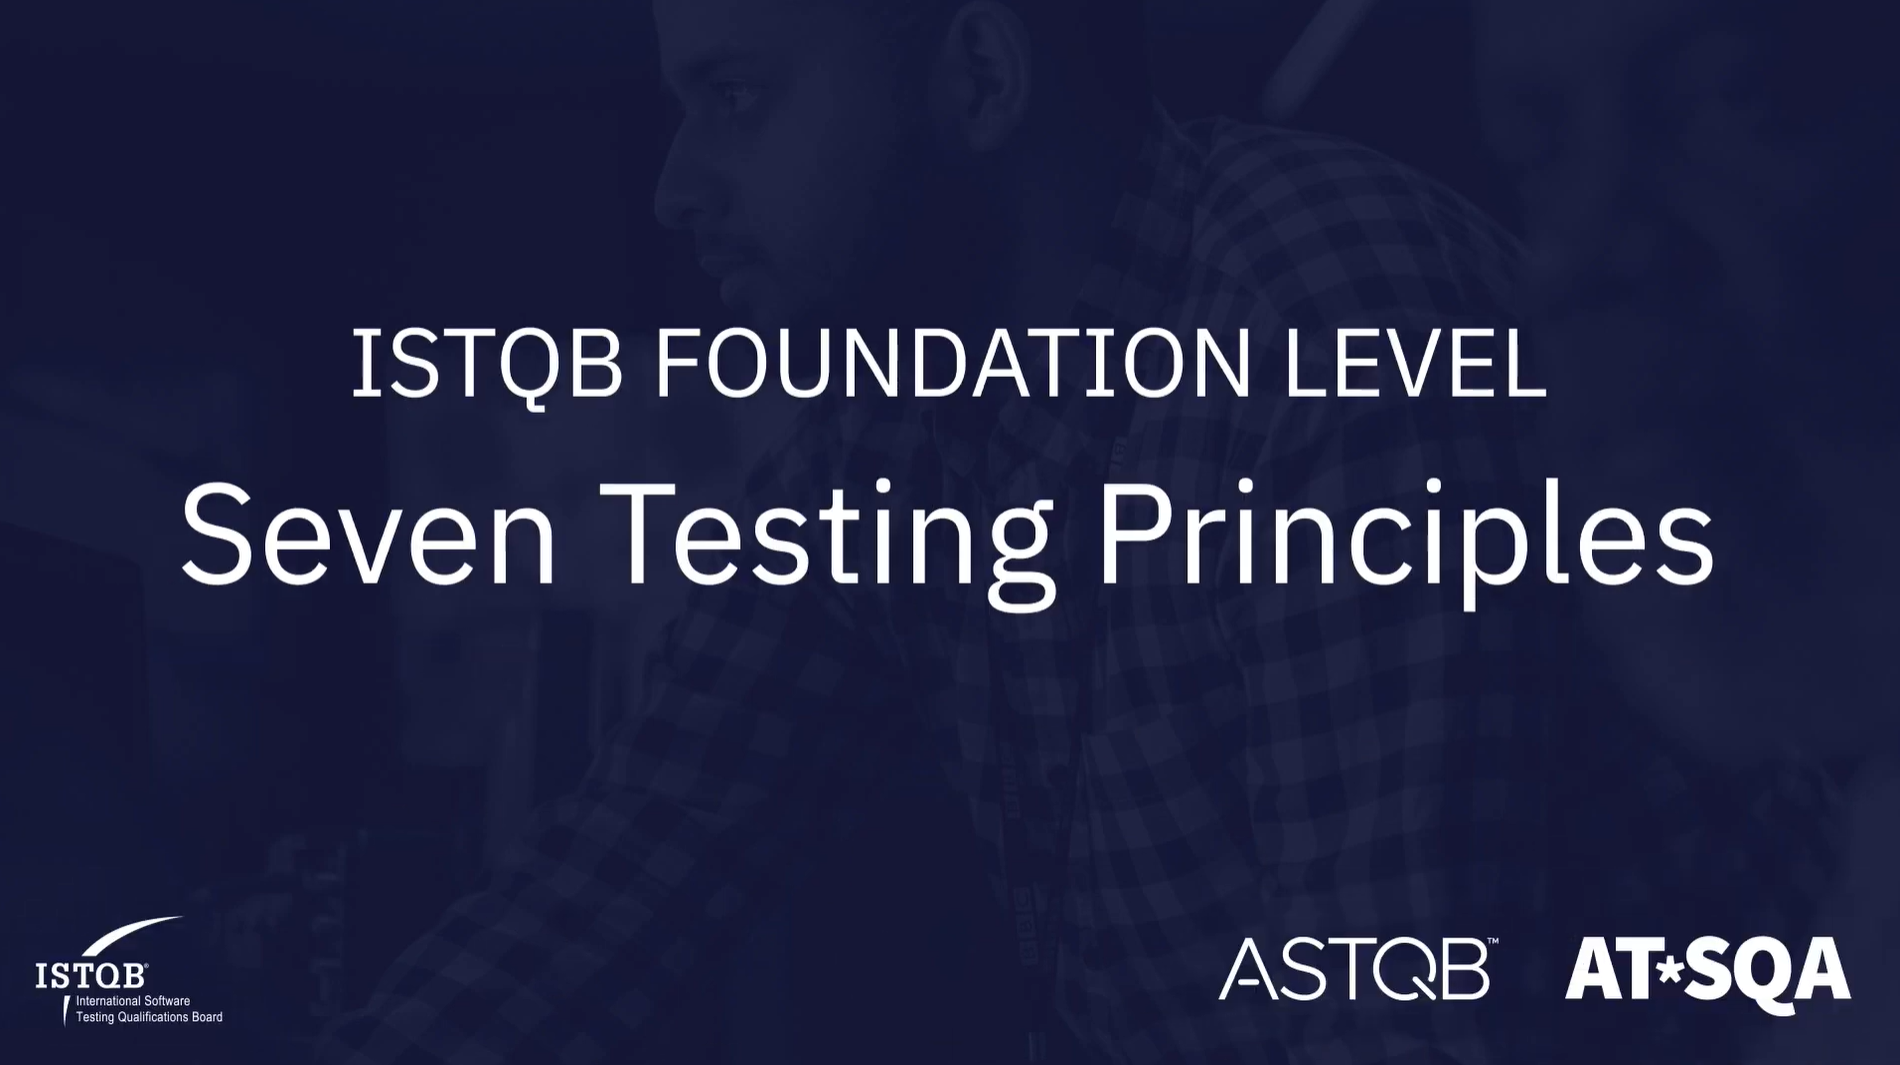 The seven Testing principles